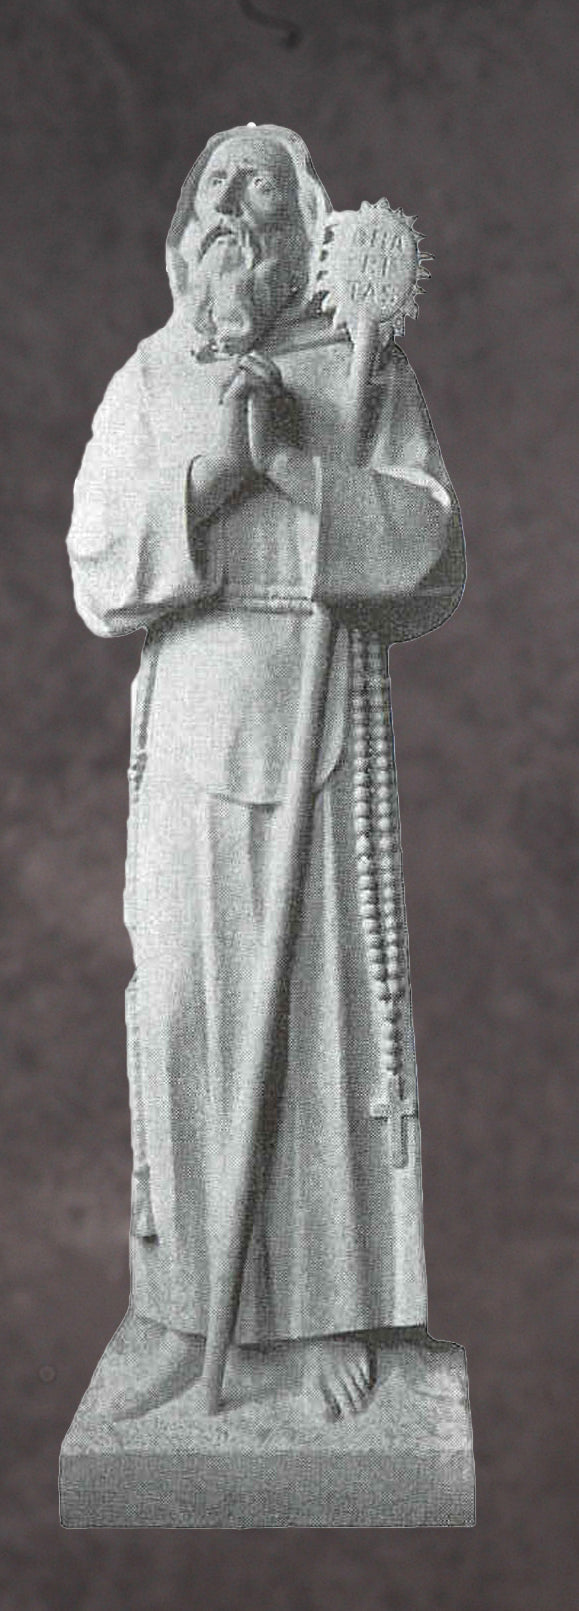 Saint Tobias Marble Statue - 72”H